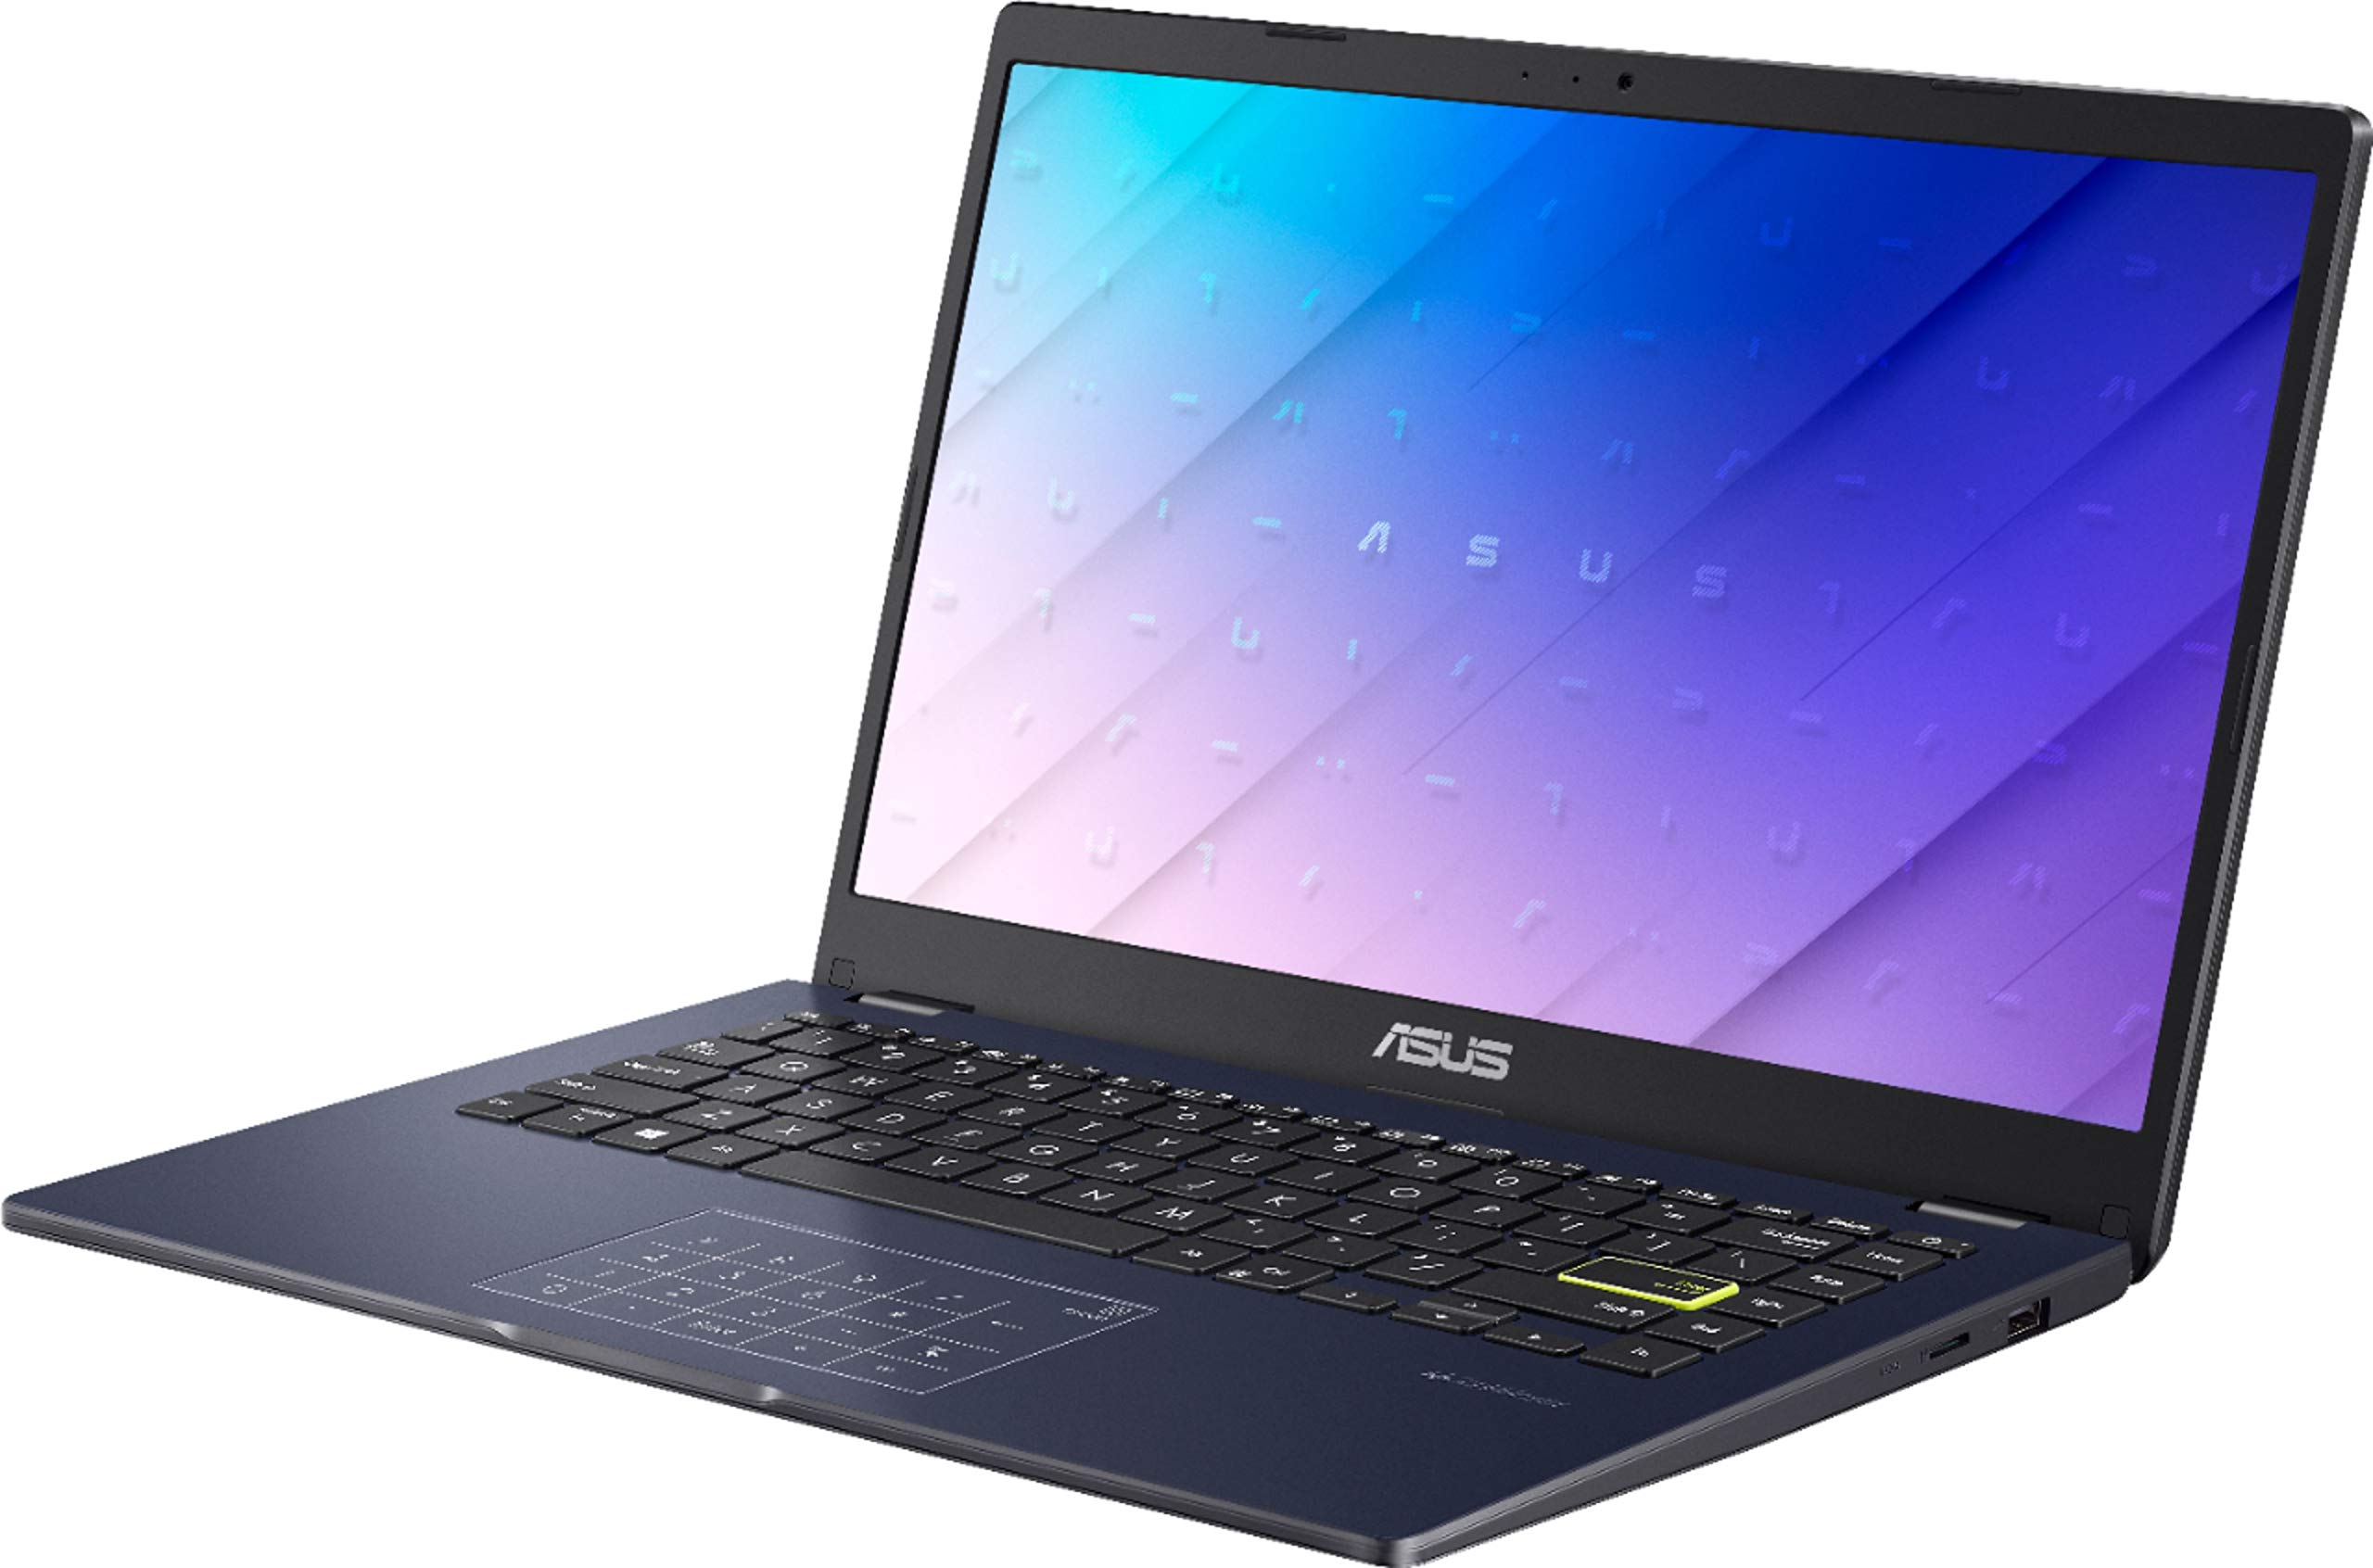 Mua Asus Vivobook E410ma Thin And Light Business Laptop 14” Hd Display Intel Celeron N4020 4gb 6620